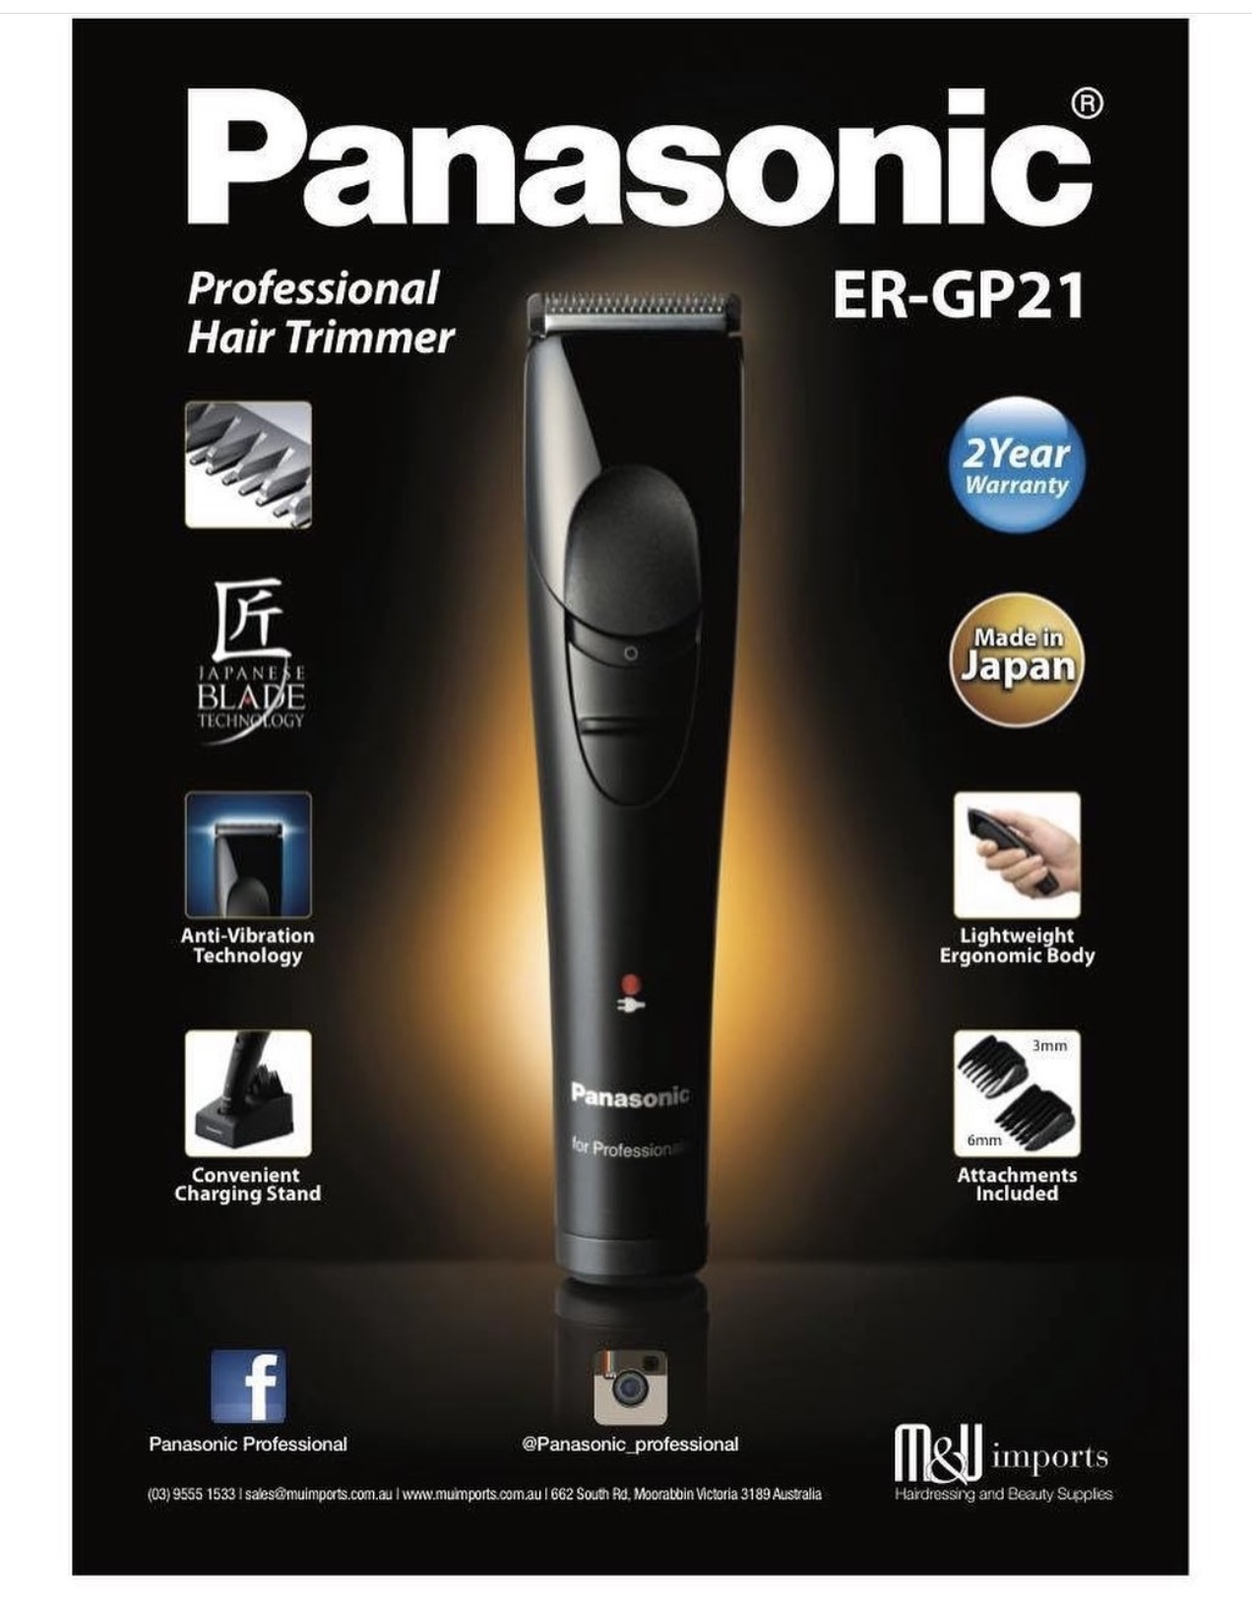 Panasonic ER-GP21 Professional Hair Trimmer